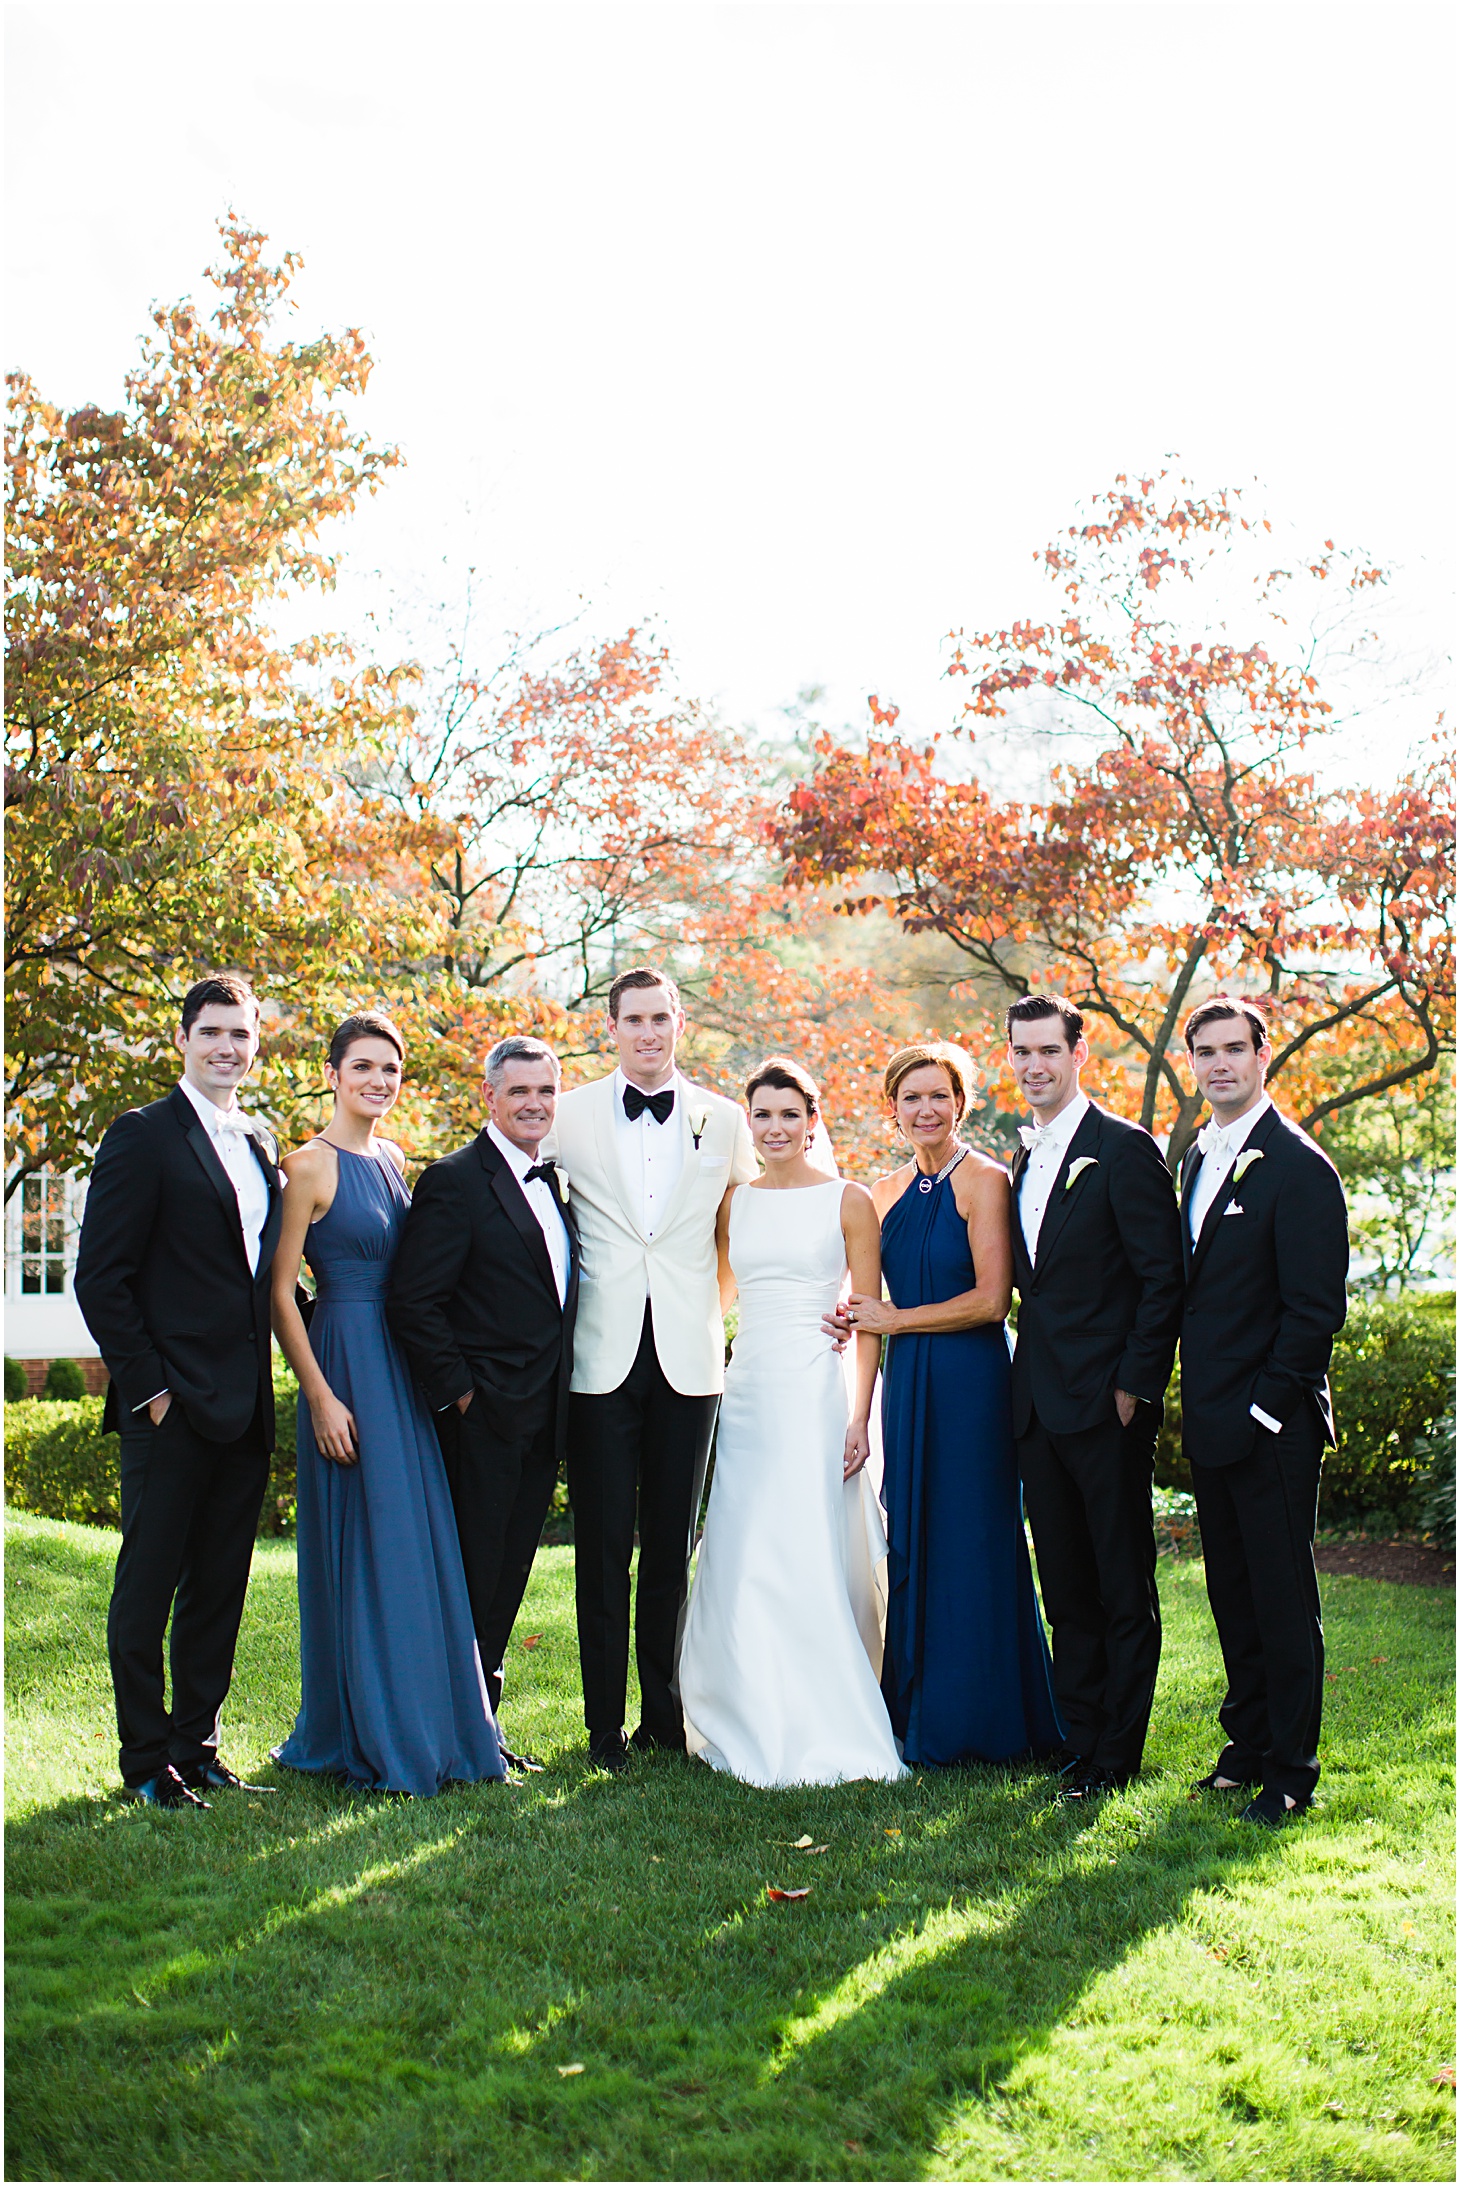 Fall Wedding | Top Washington DC wedding photographer Sarah Bradshaw